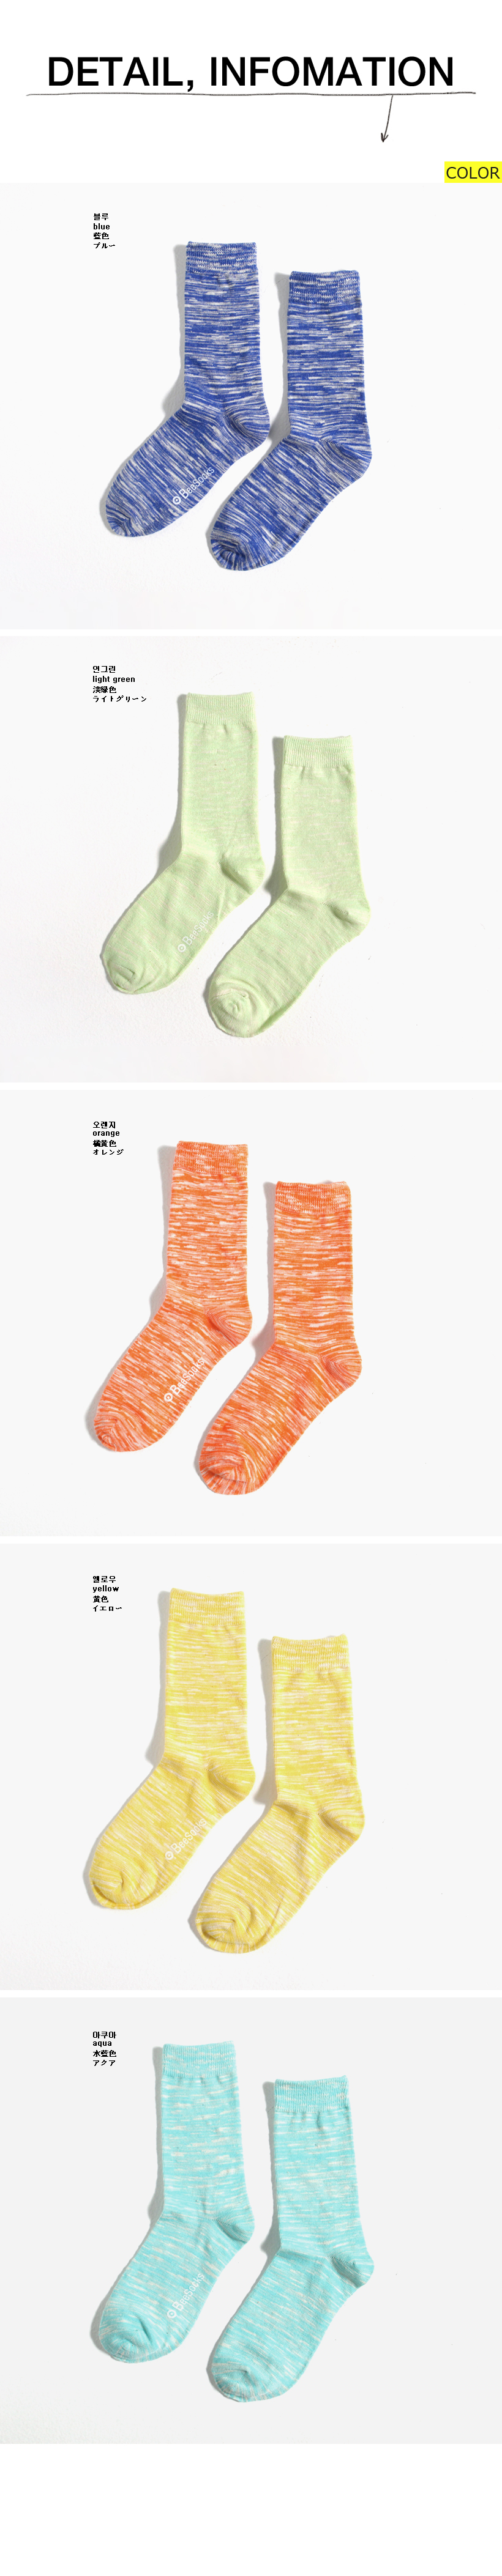 *Sockserely yours[Bee socks]*ミックスカラー綿100%素材シンプルソックス・全5色 | DHOLIC | 詳細画像11